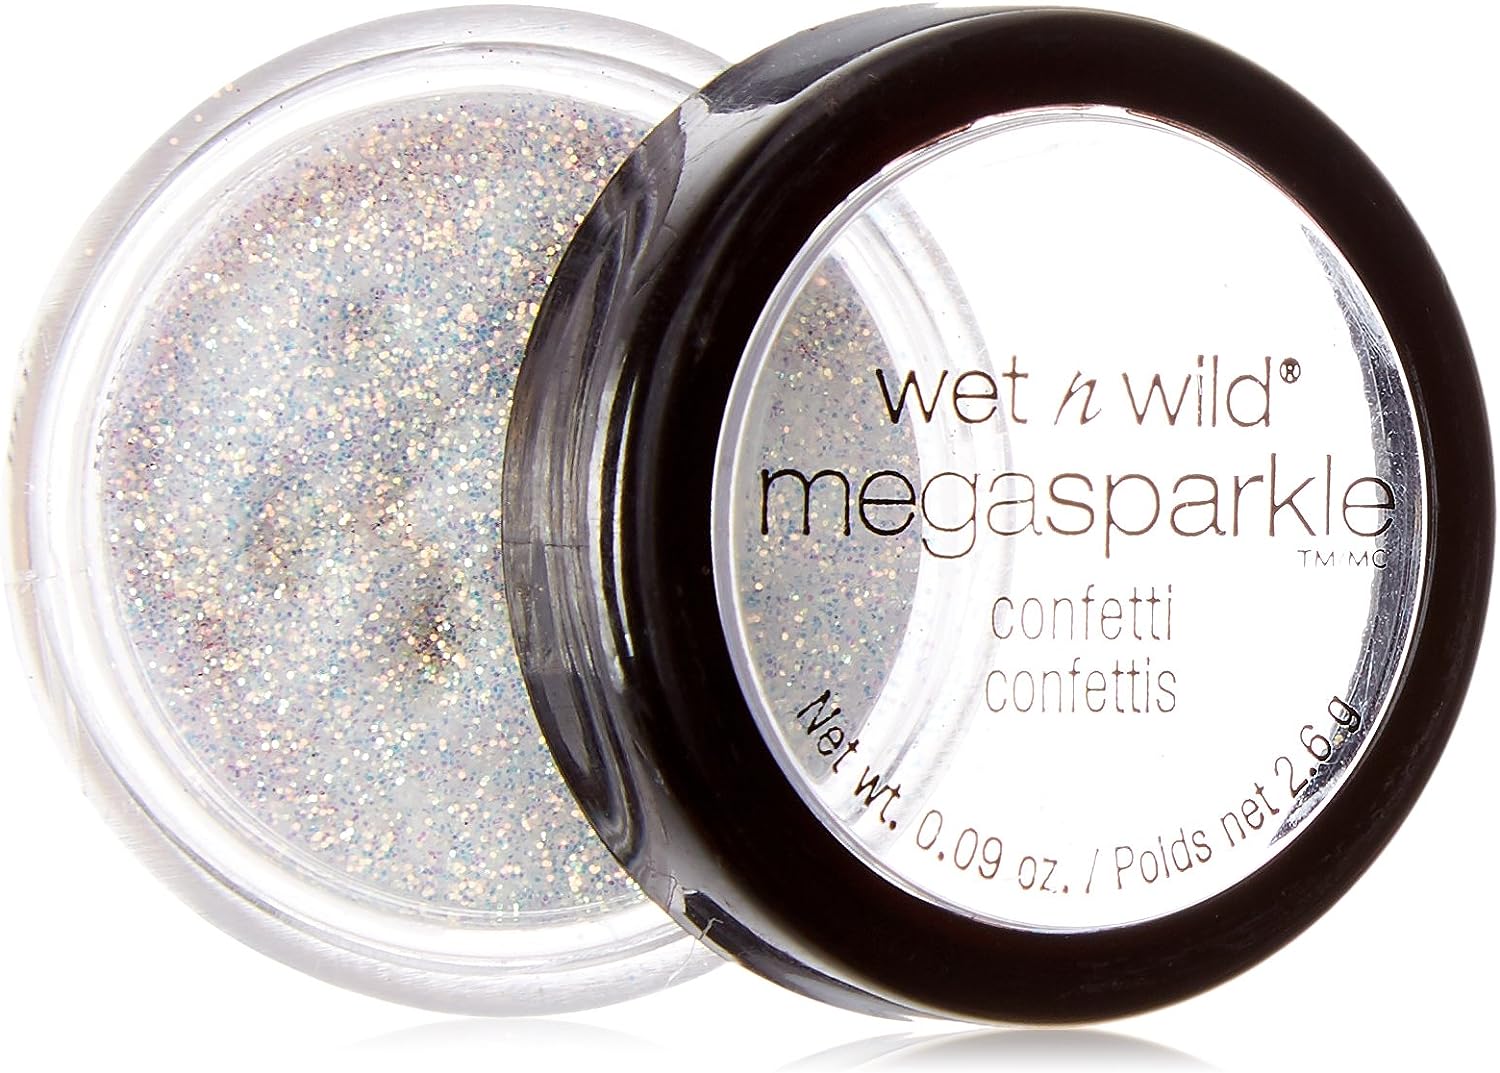 WET N WILD Mega Sparkle Confetti - Lilac frosting